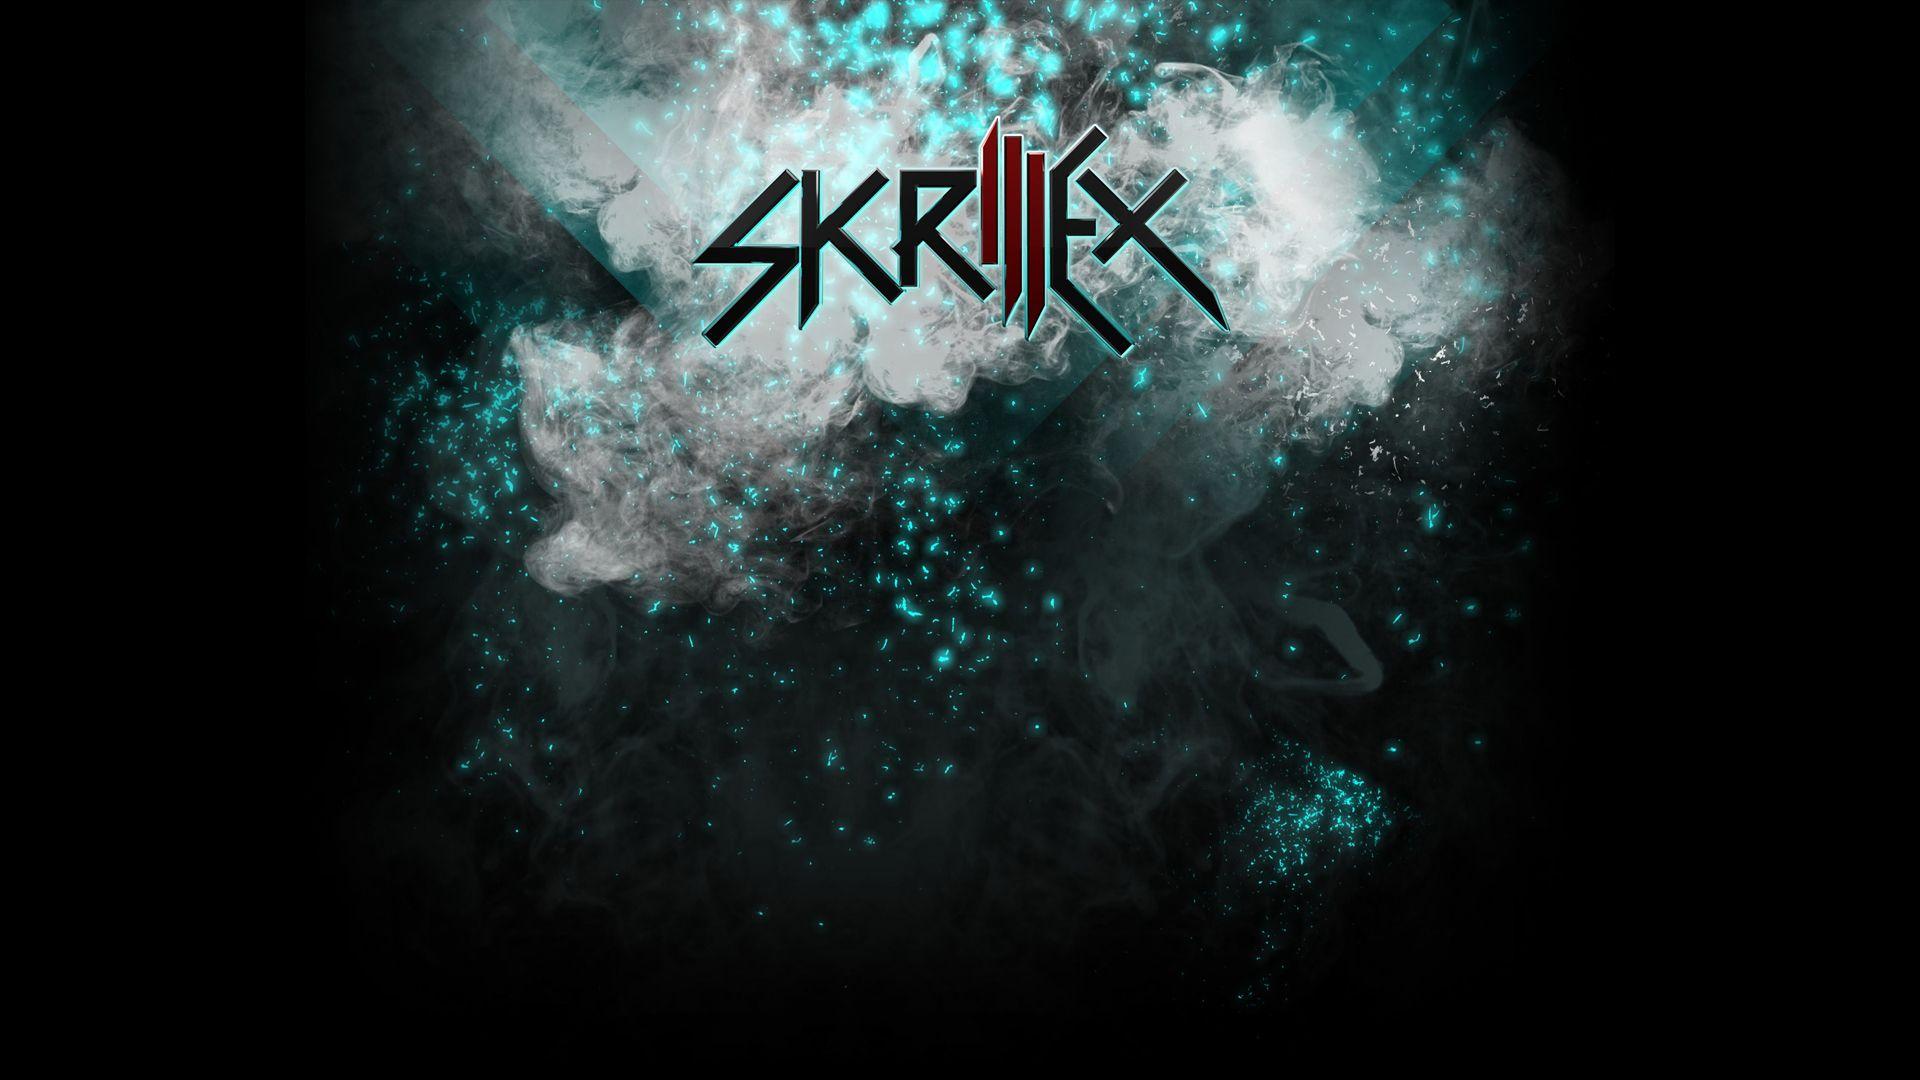 Skrillex HD Wallpaper and Background